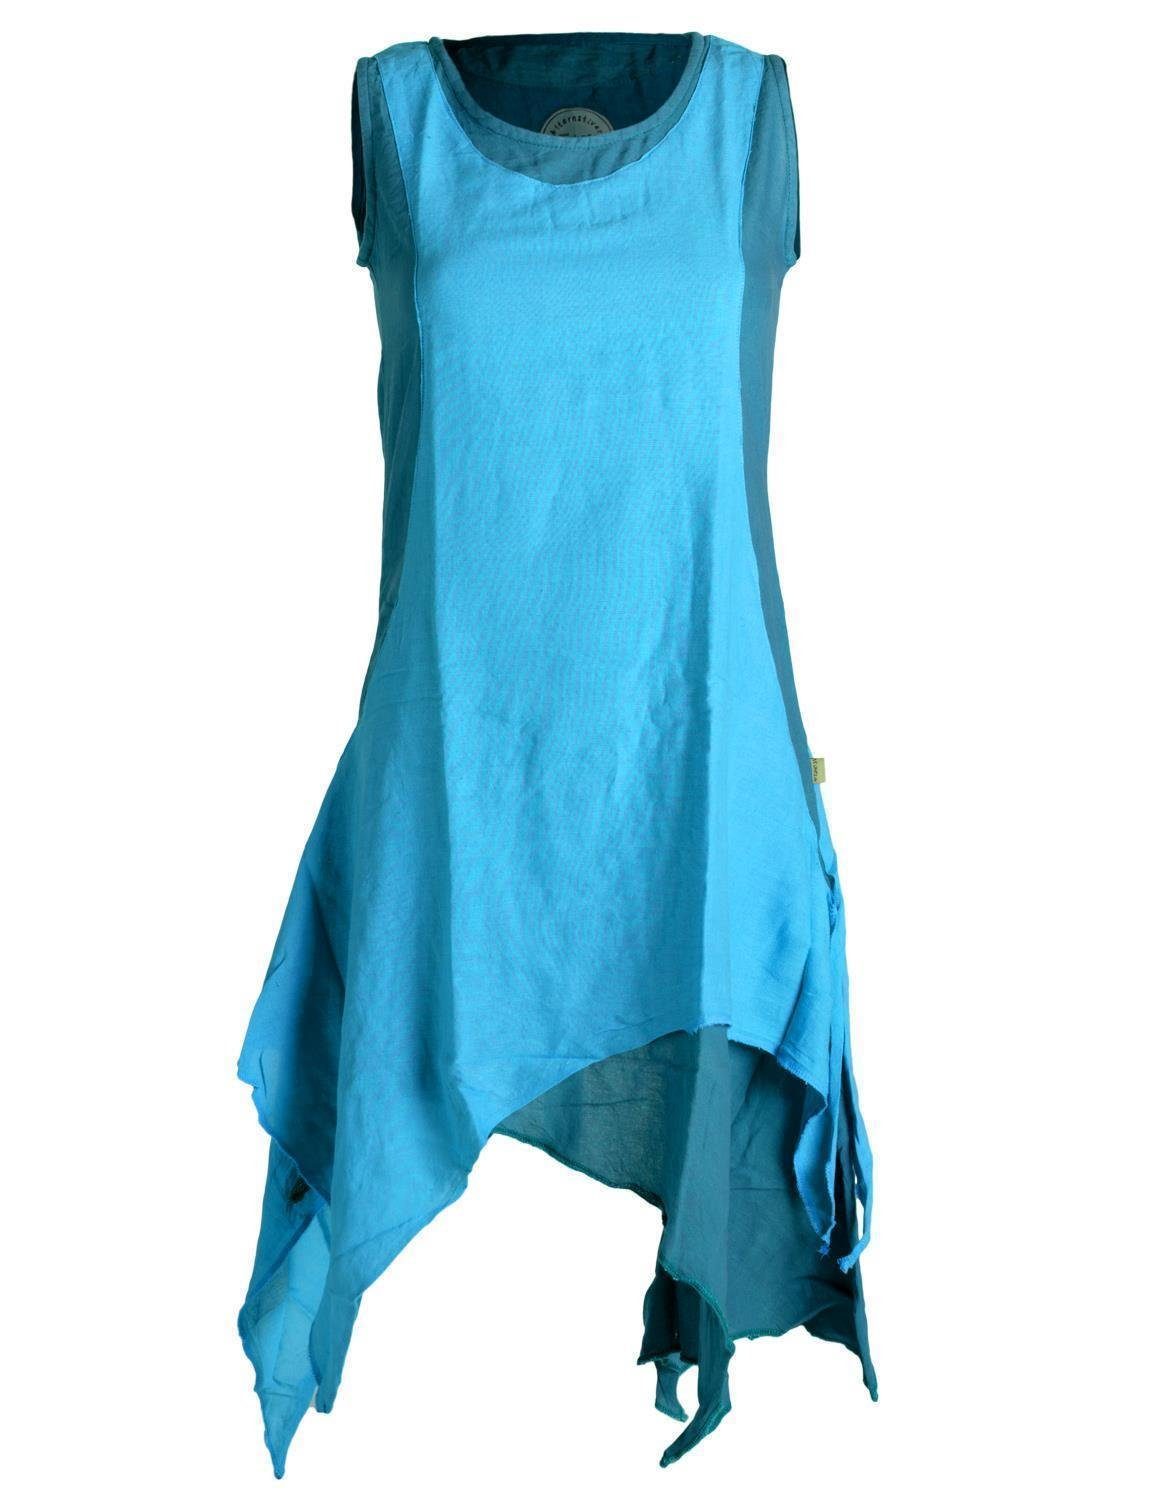 Vishes Sommerkleid Ärmelloses Lagenlook Kleid handgewebte Baumwolle Goa, Boho, Hippie Style türkis